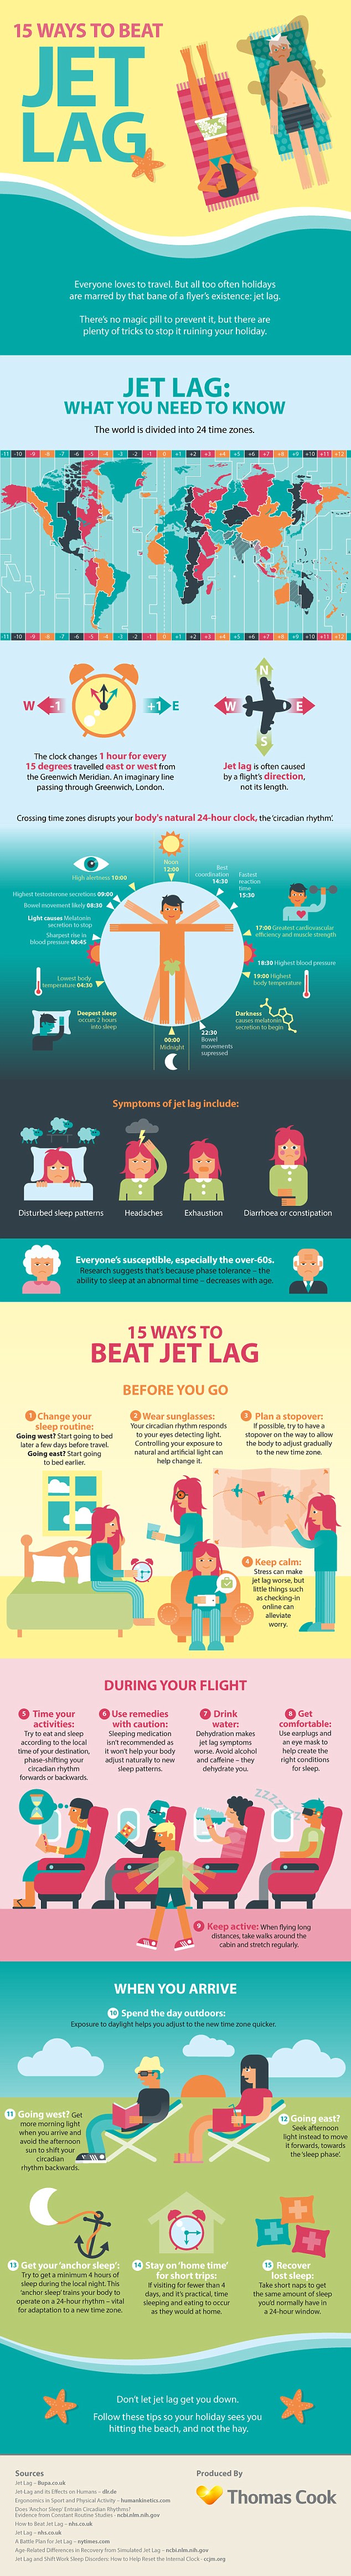 15 ways to beat jetlag